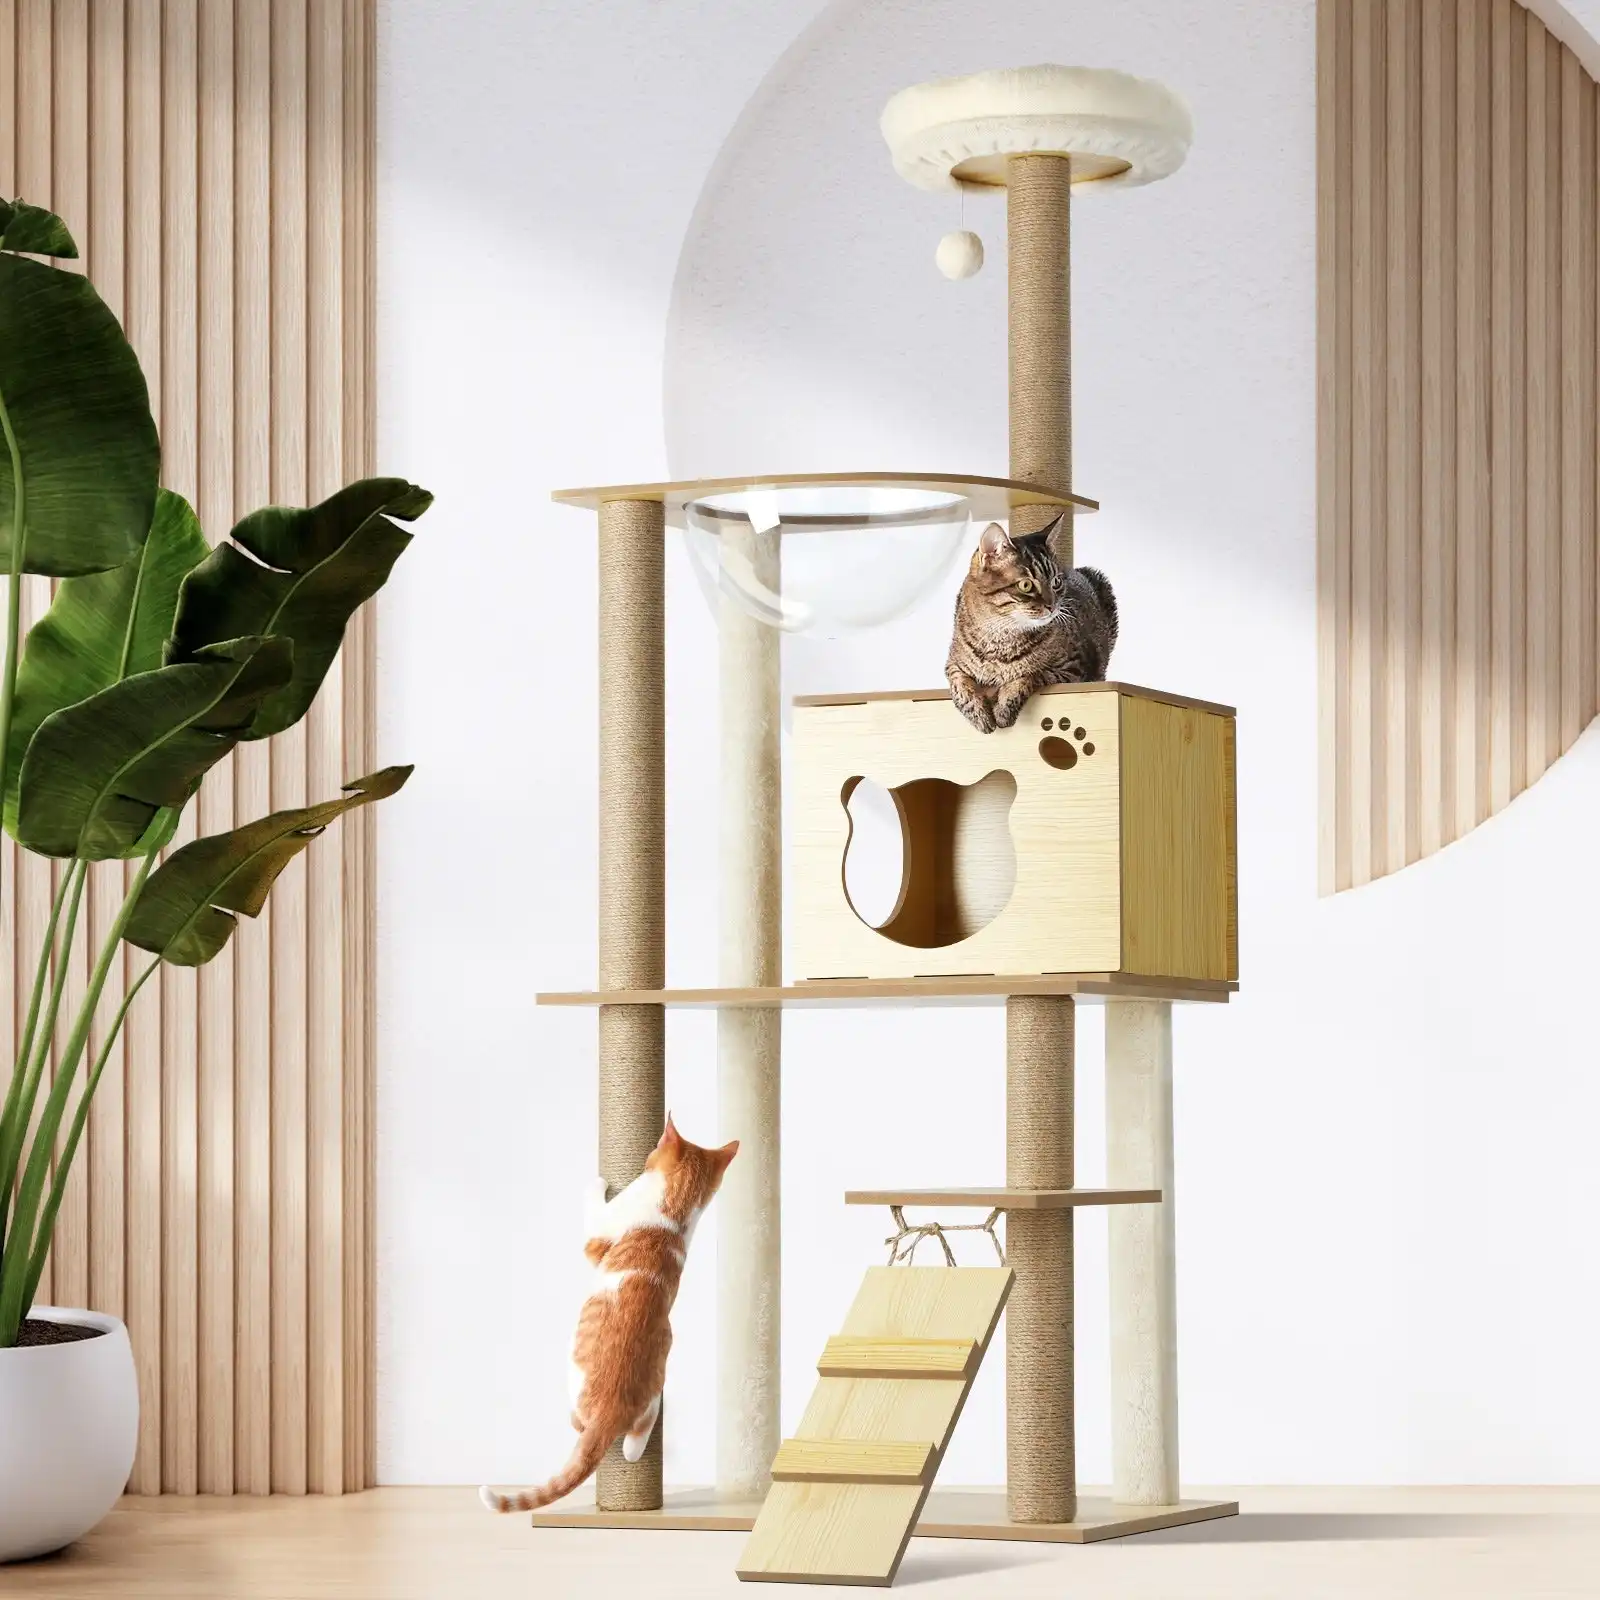 Alopet Cat Tree Trees Wooden Scratching Post Scratcher Tower Condo Pet Furniture